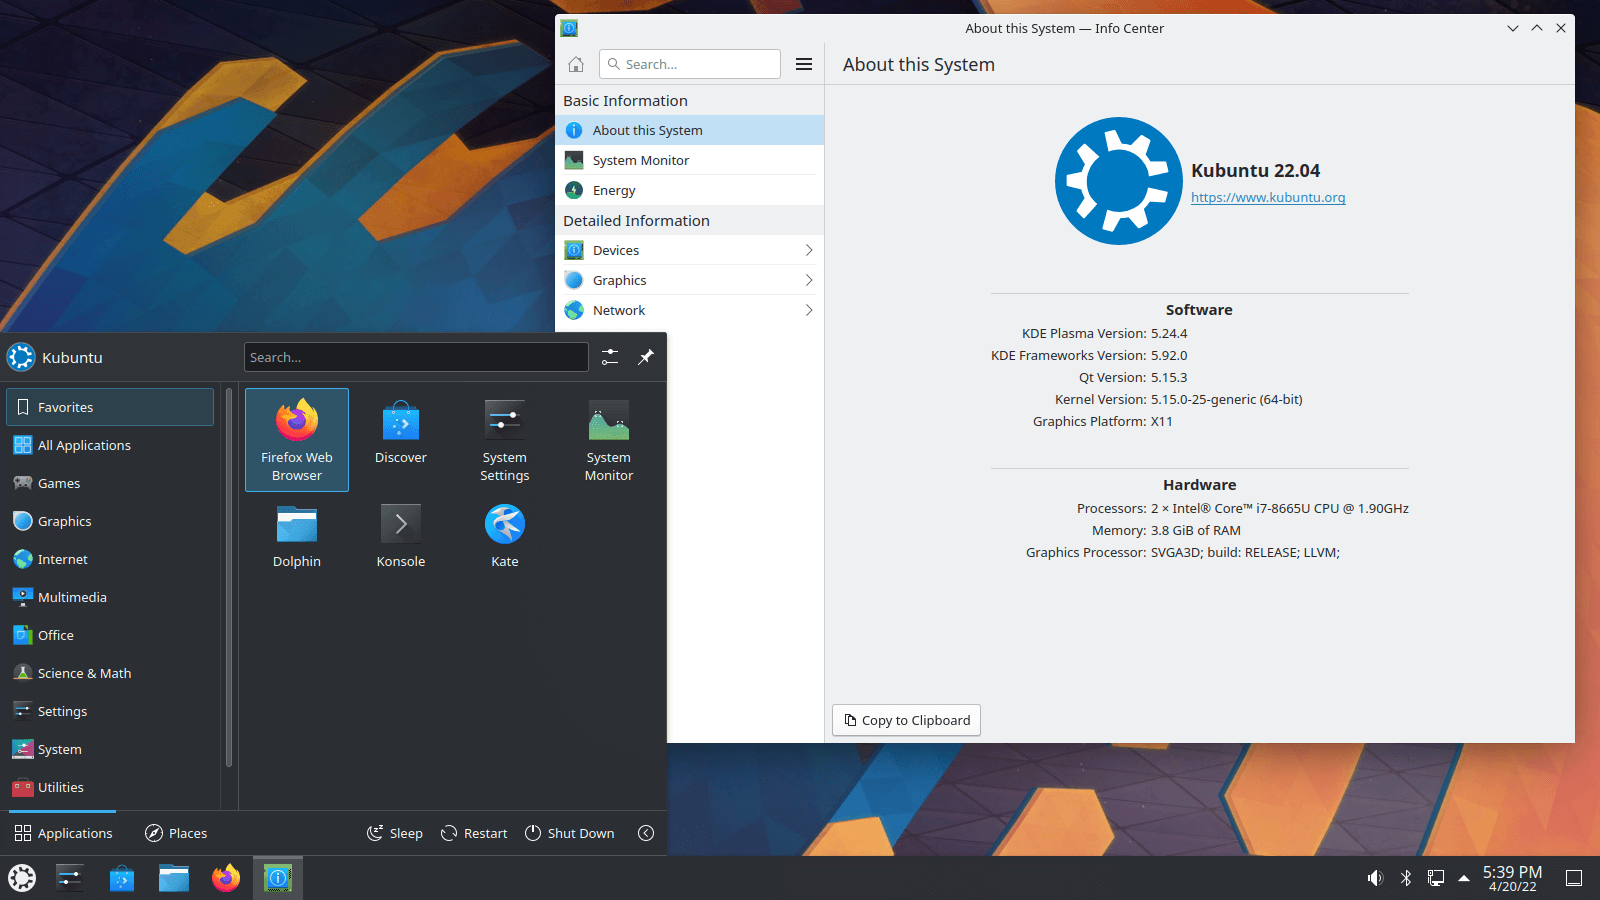 Kubuntu 22.04 LTS